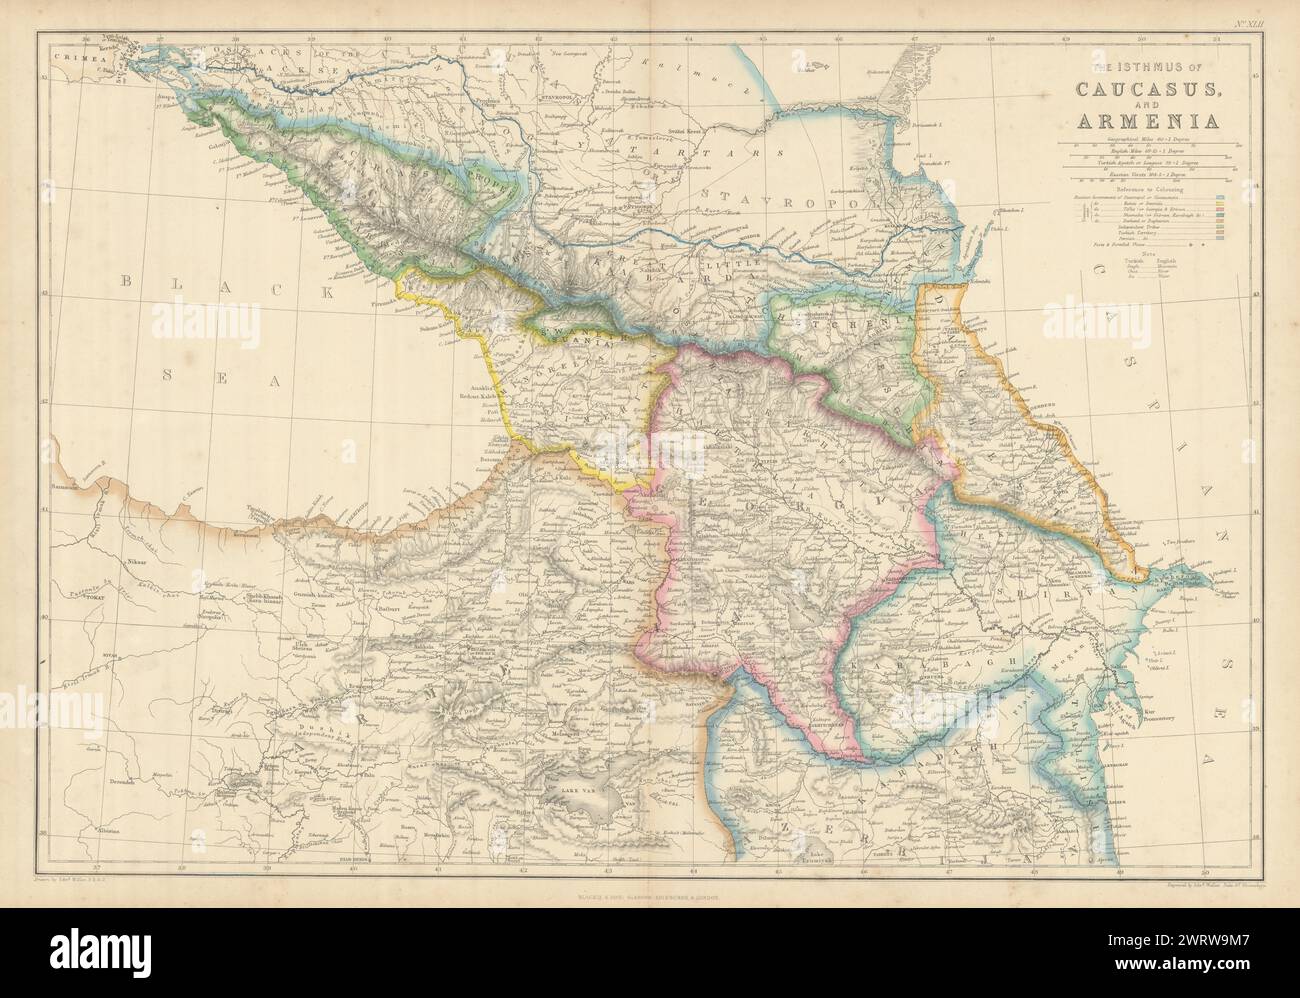 The Isthmus of Caucasus & Armenia by Edward Weller. Georgia Azerbaijan 1860 map Stock Photo